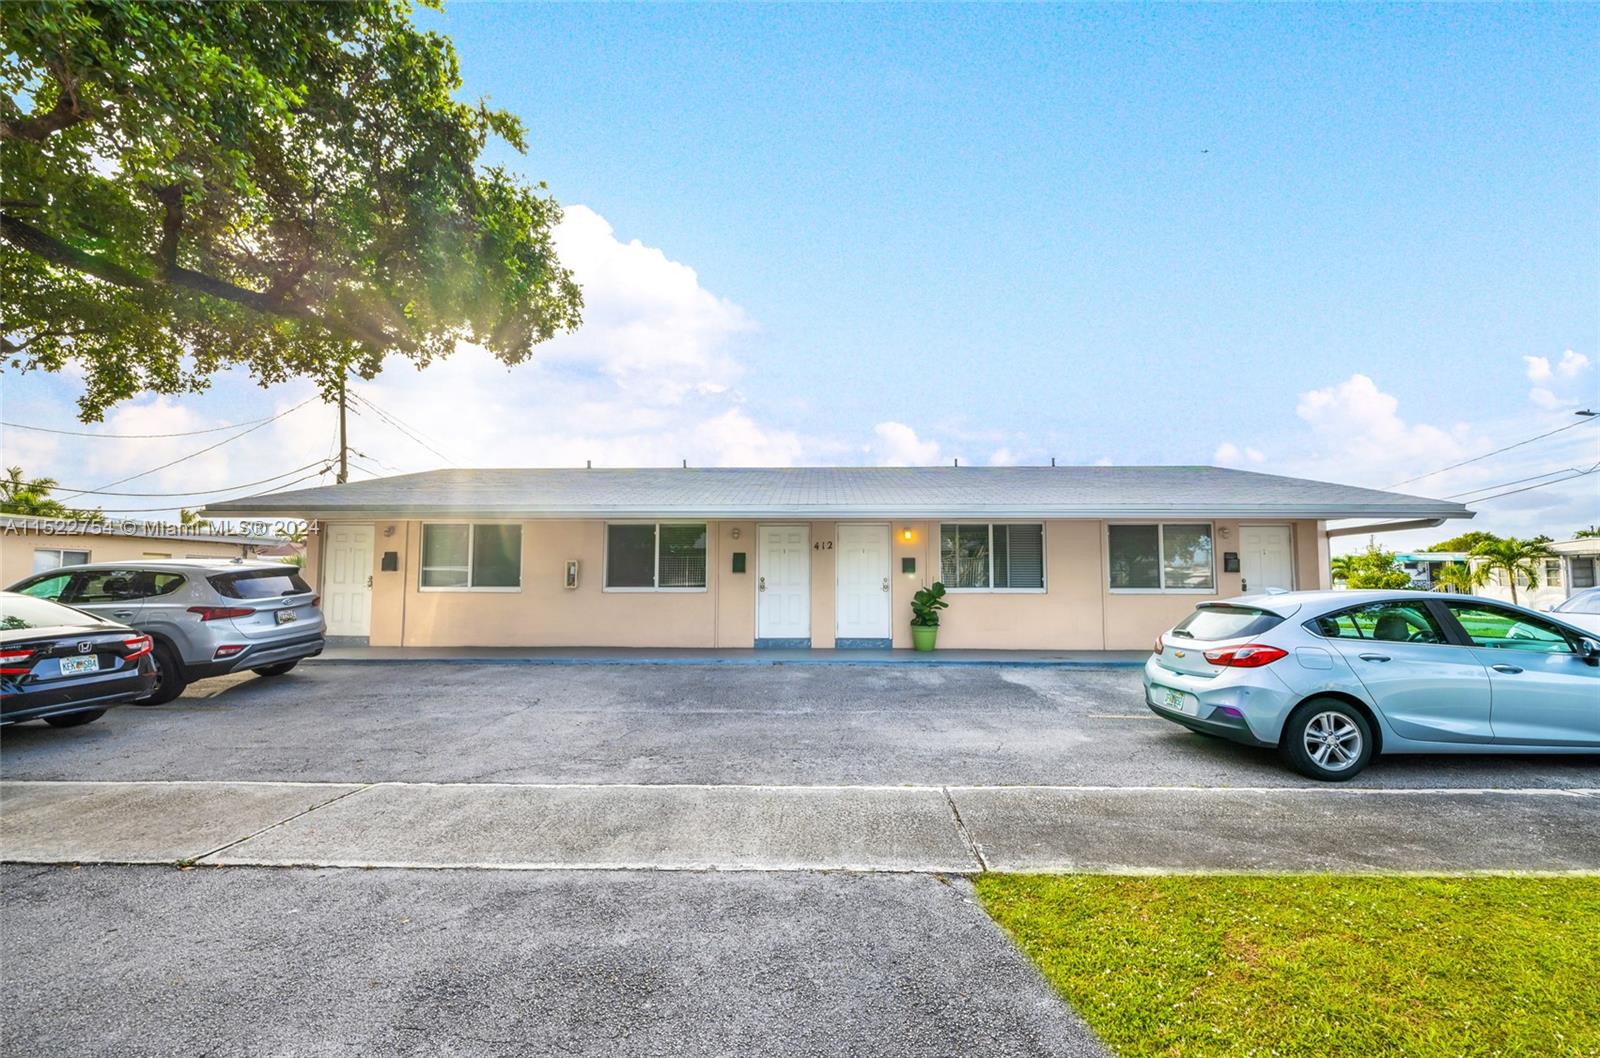 Rental Property at 412 Ne 4th Ave, Hallandale Beach, Broward County, Florida -  - $965,000 MO.